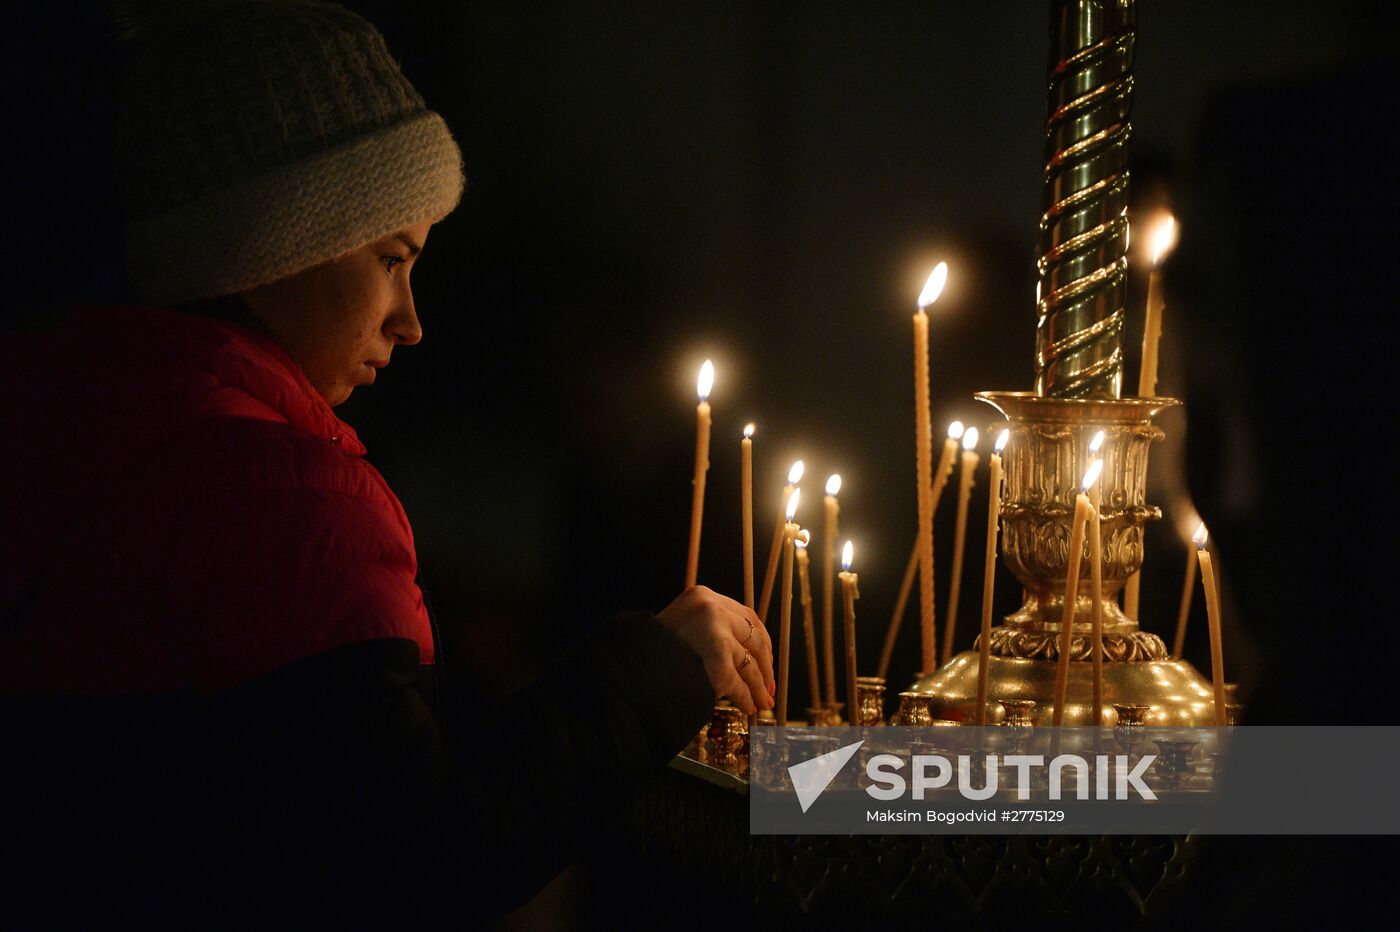 Russian regions celebrate Epiphany Day